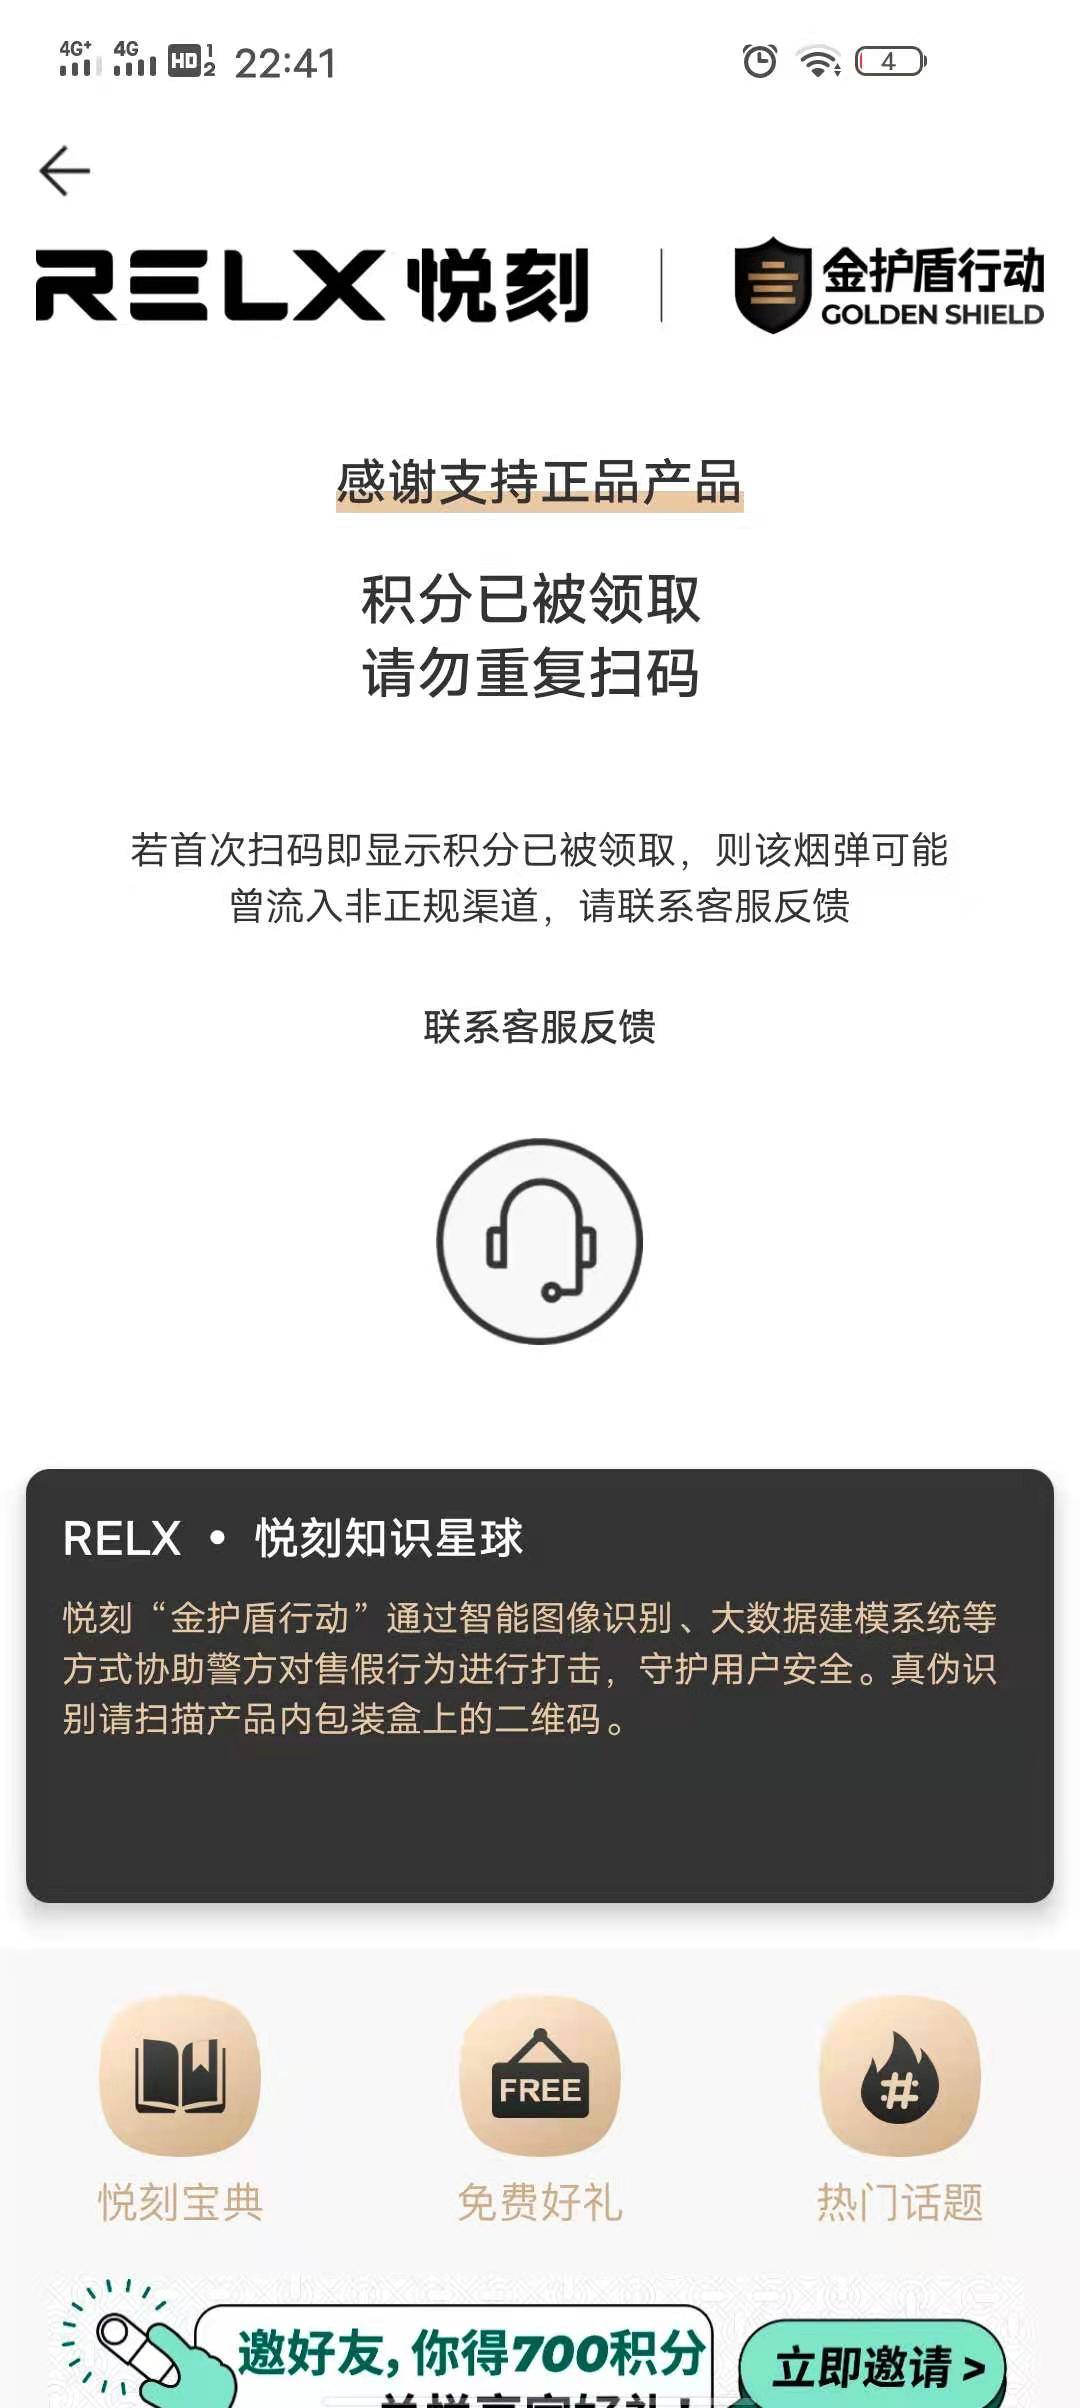 relx悦刻电子烟真假鉴别